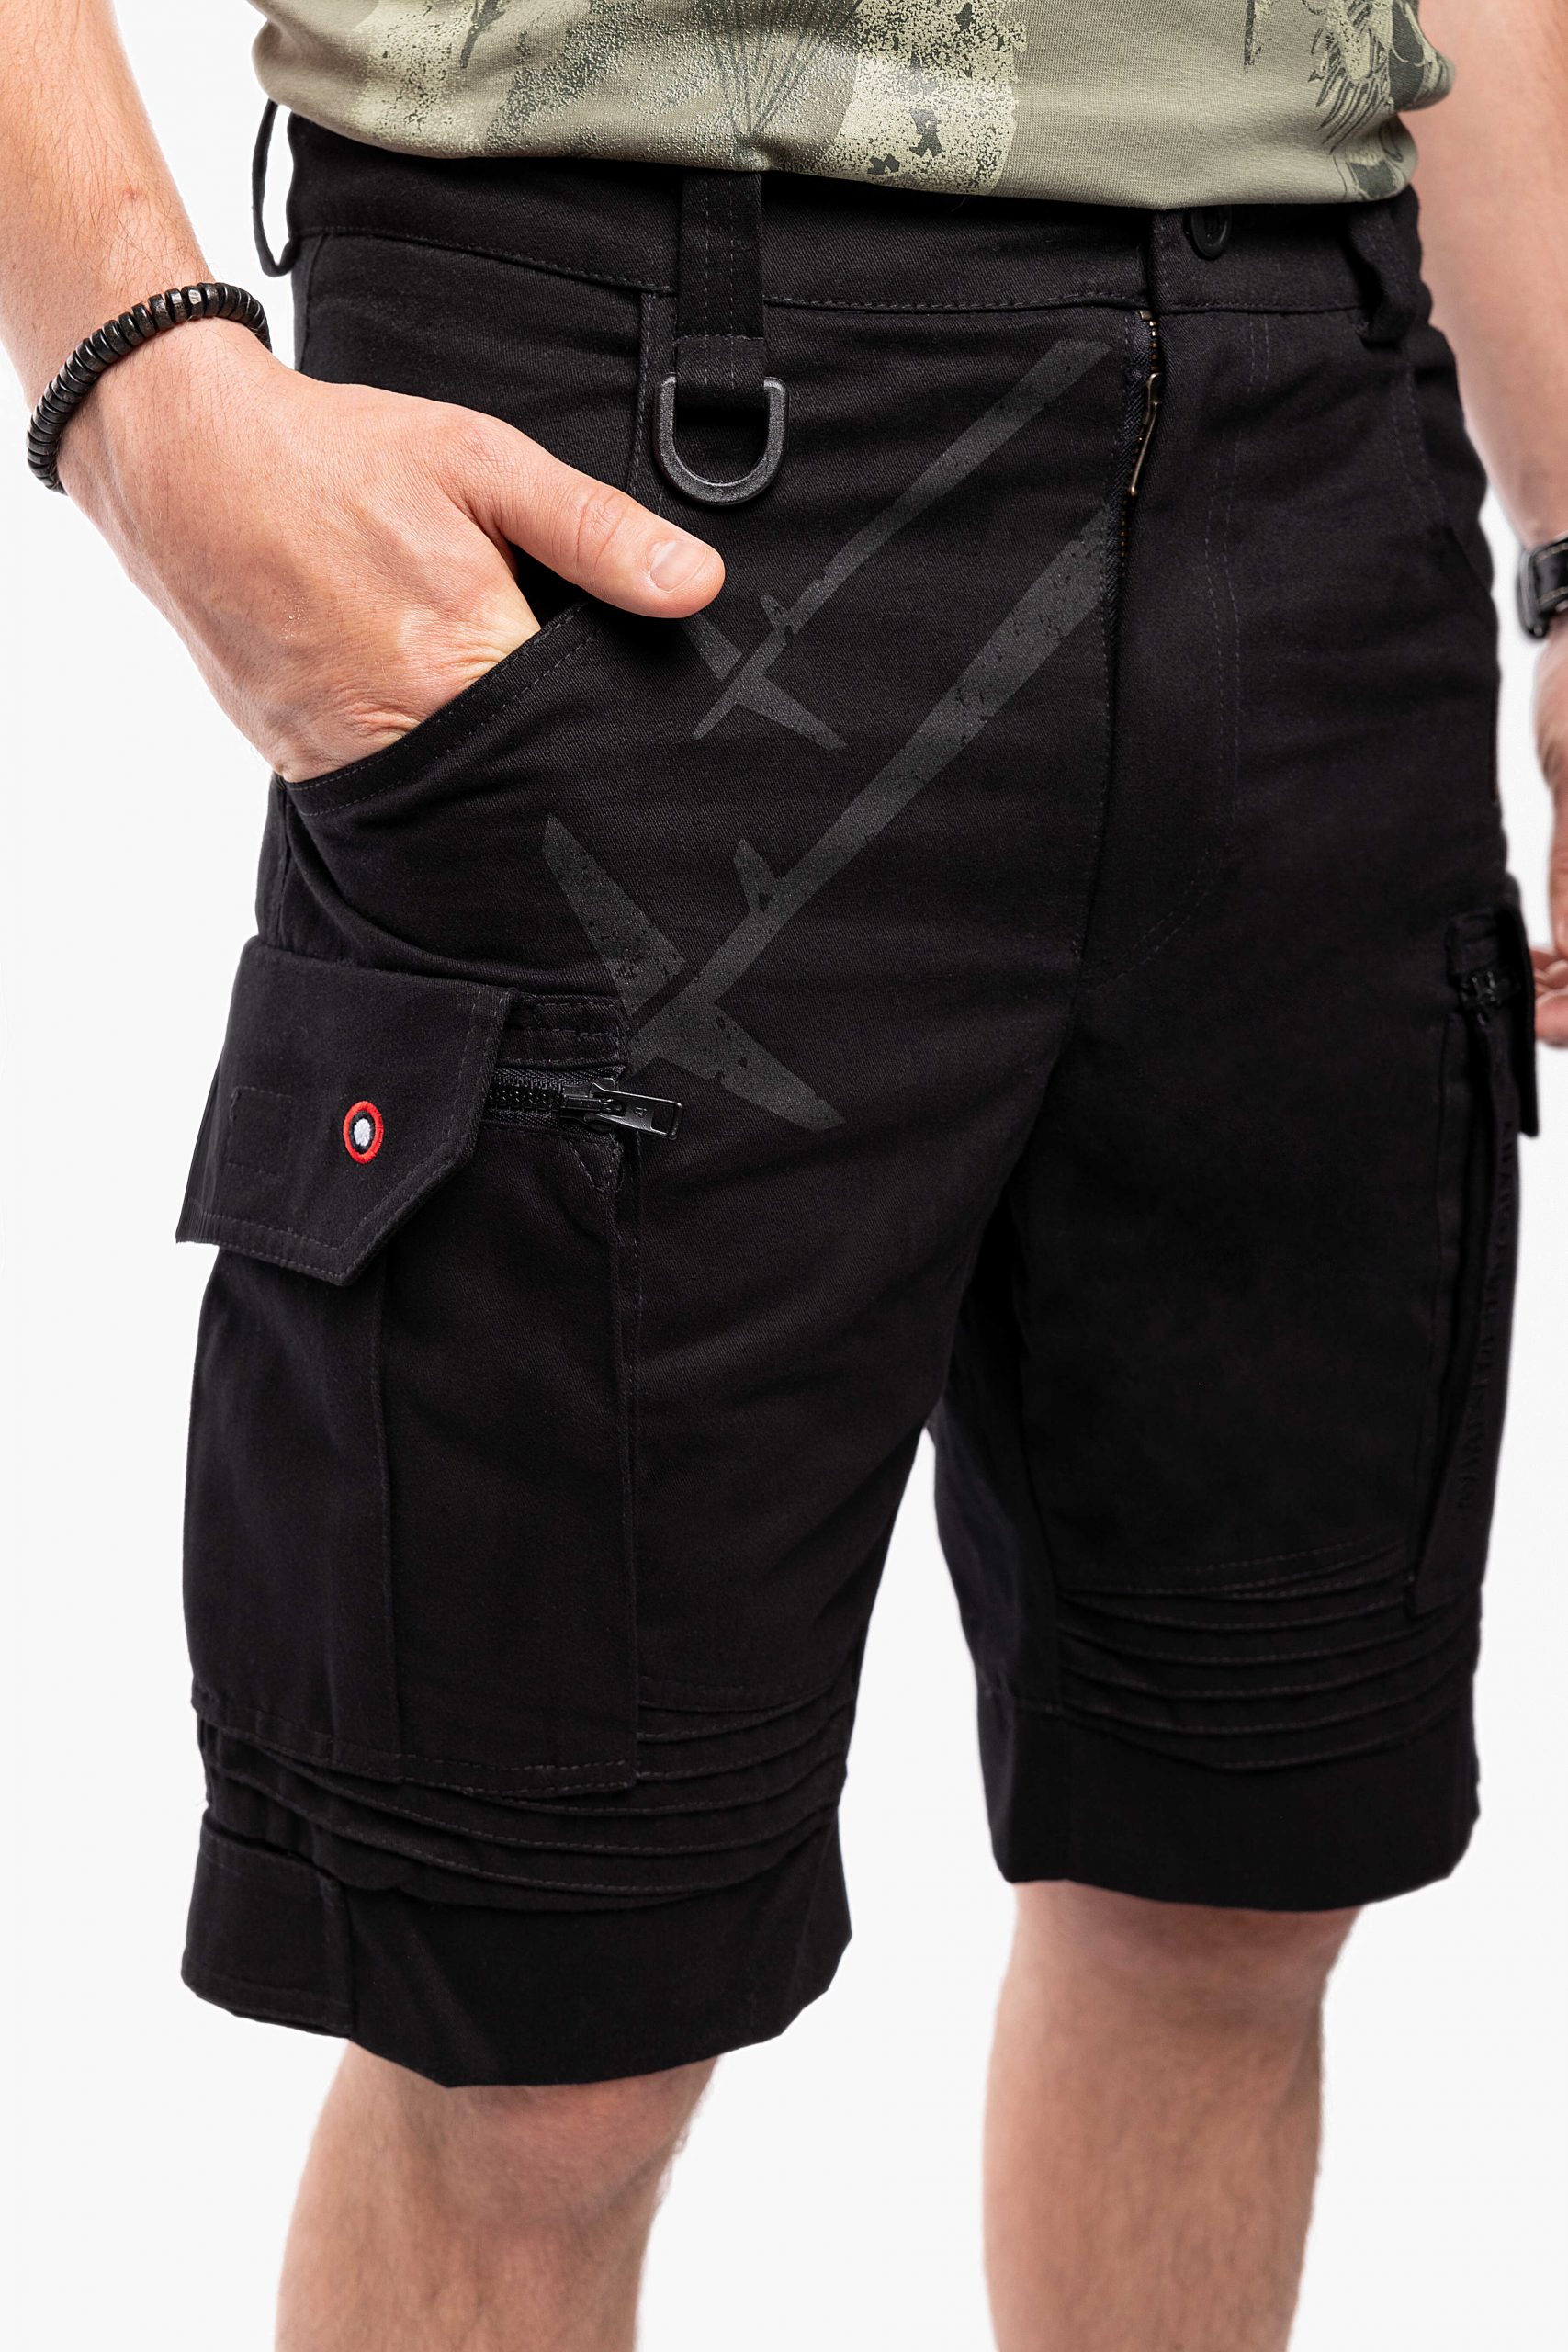 Men's Shorts Flyer. Color black. 3.